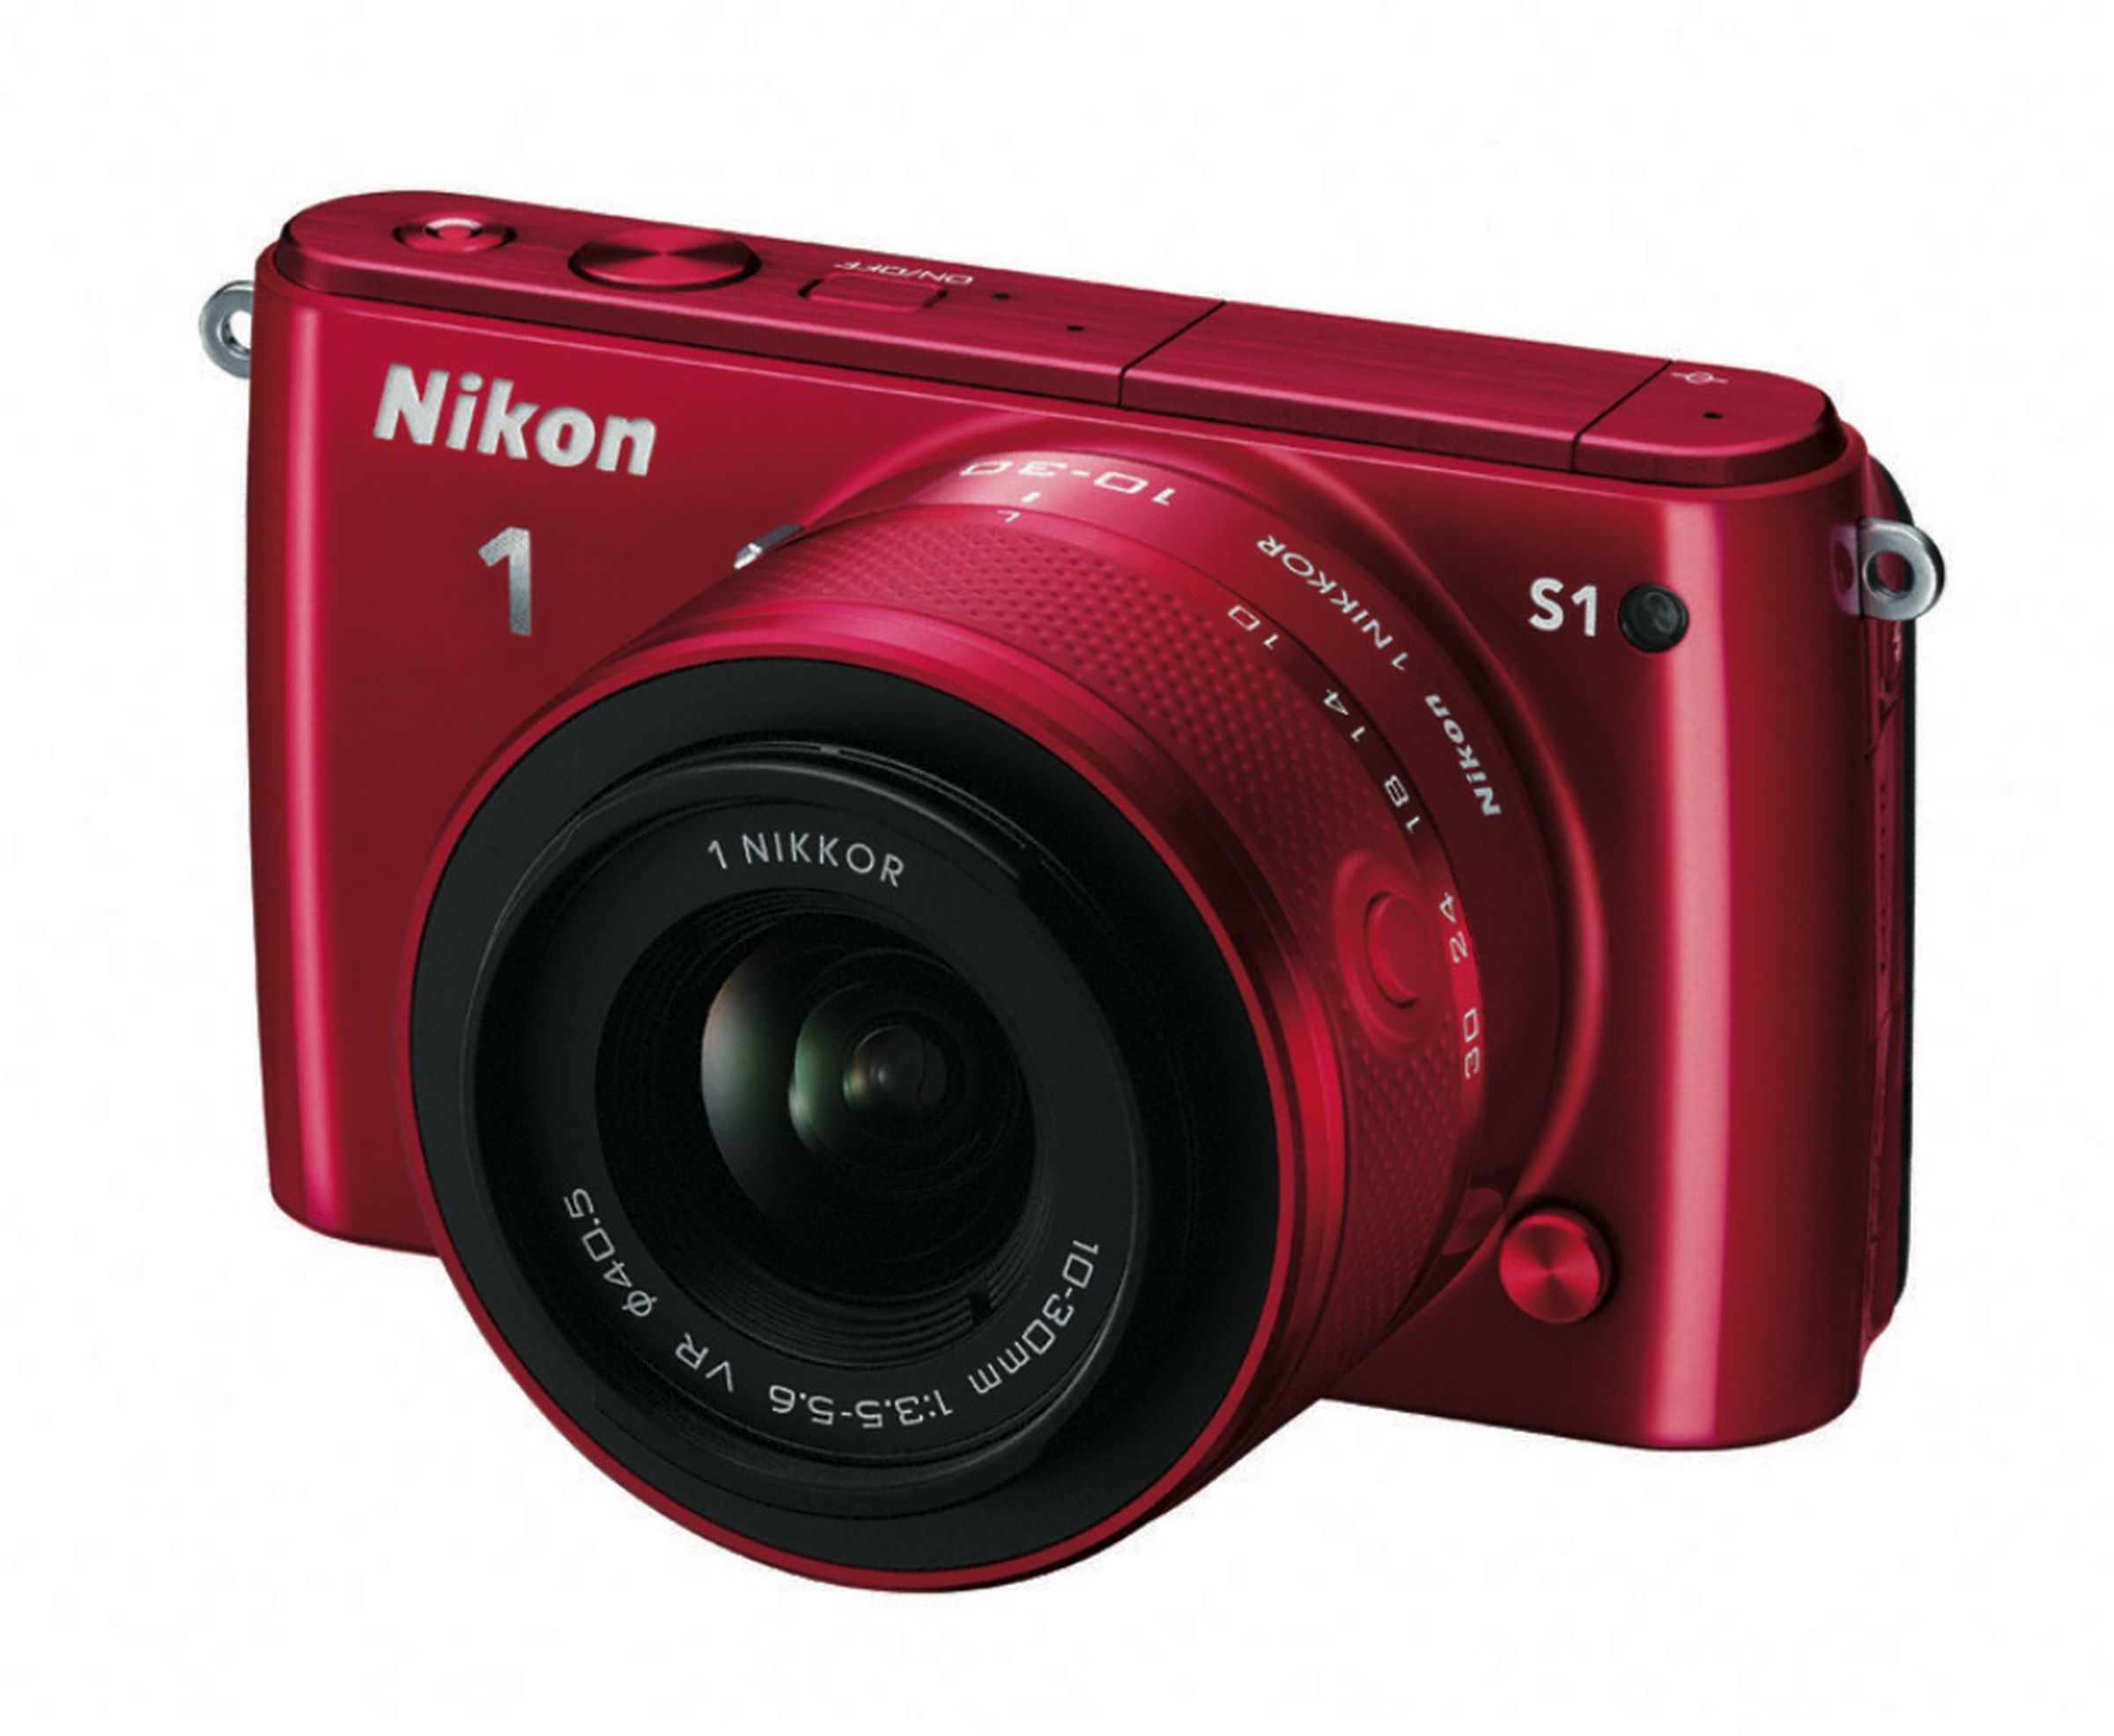 Nikon 1 Series cameras and lenses